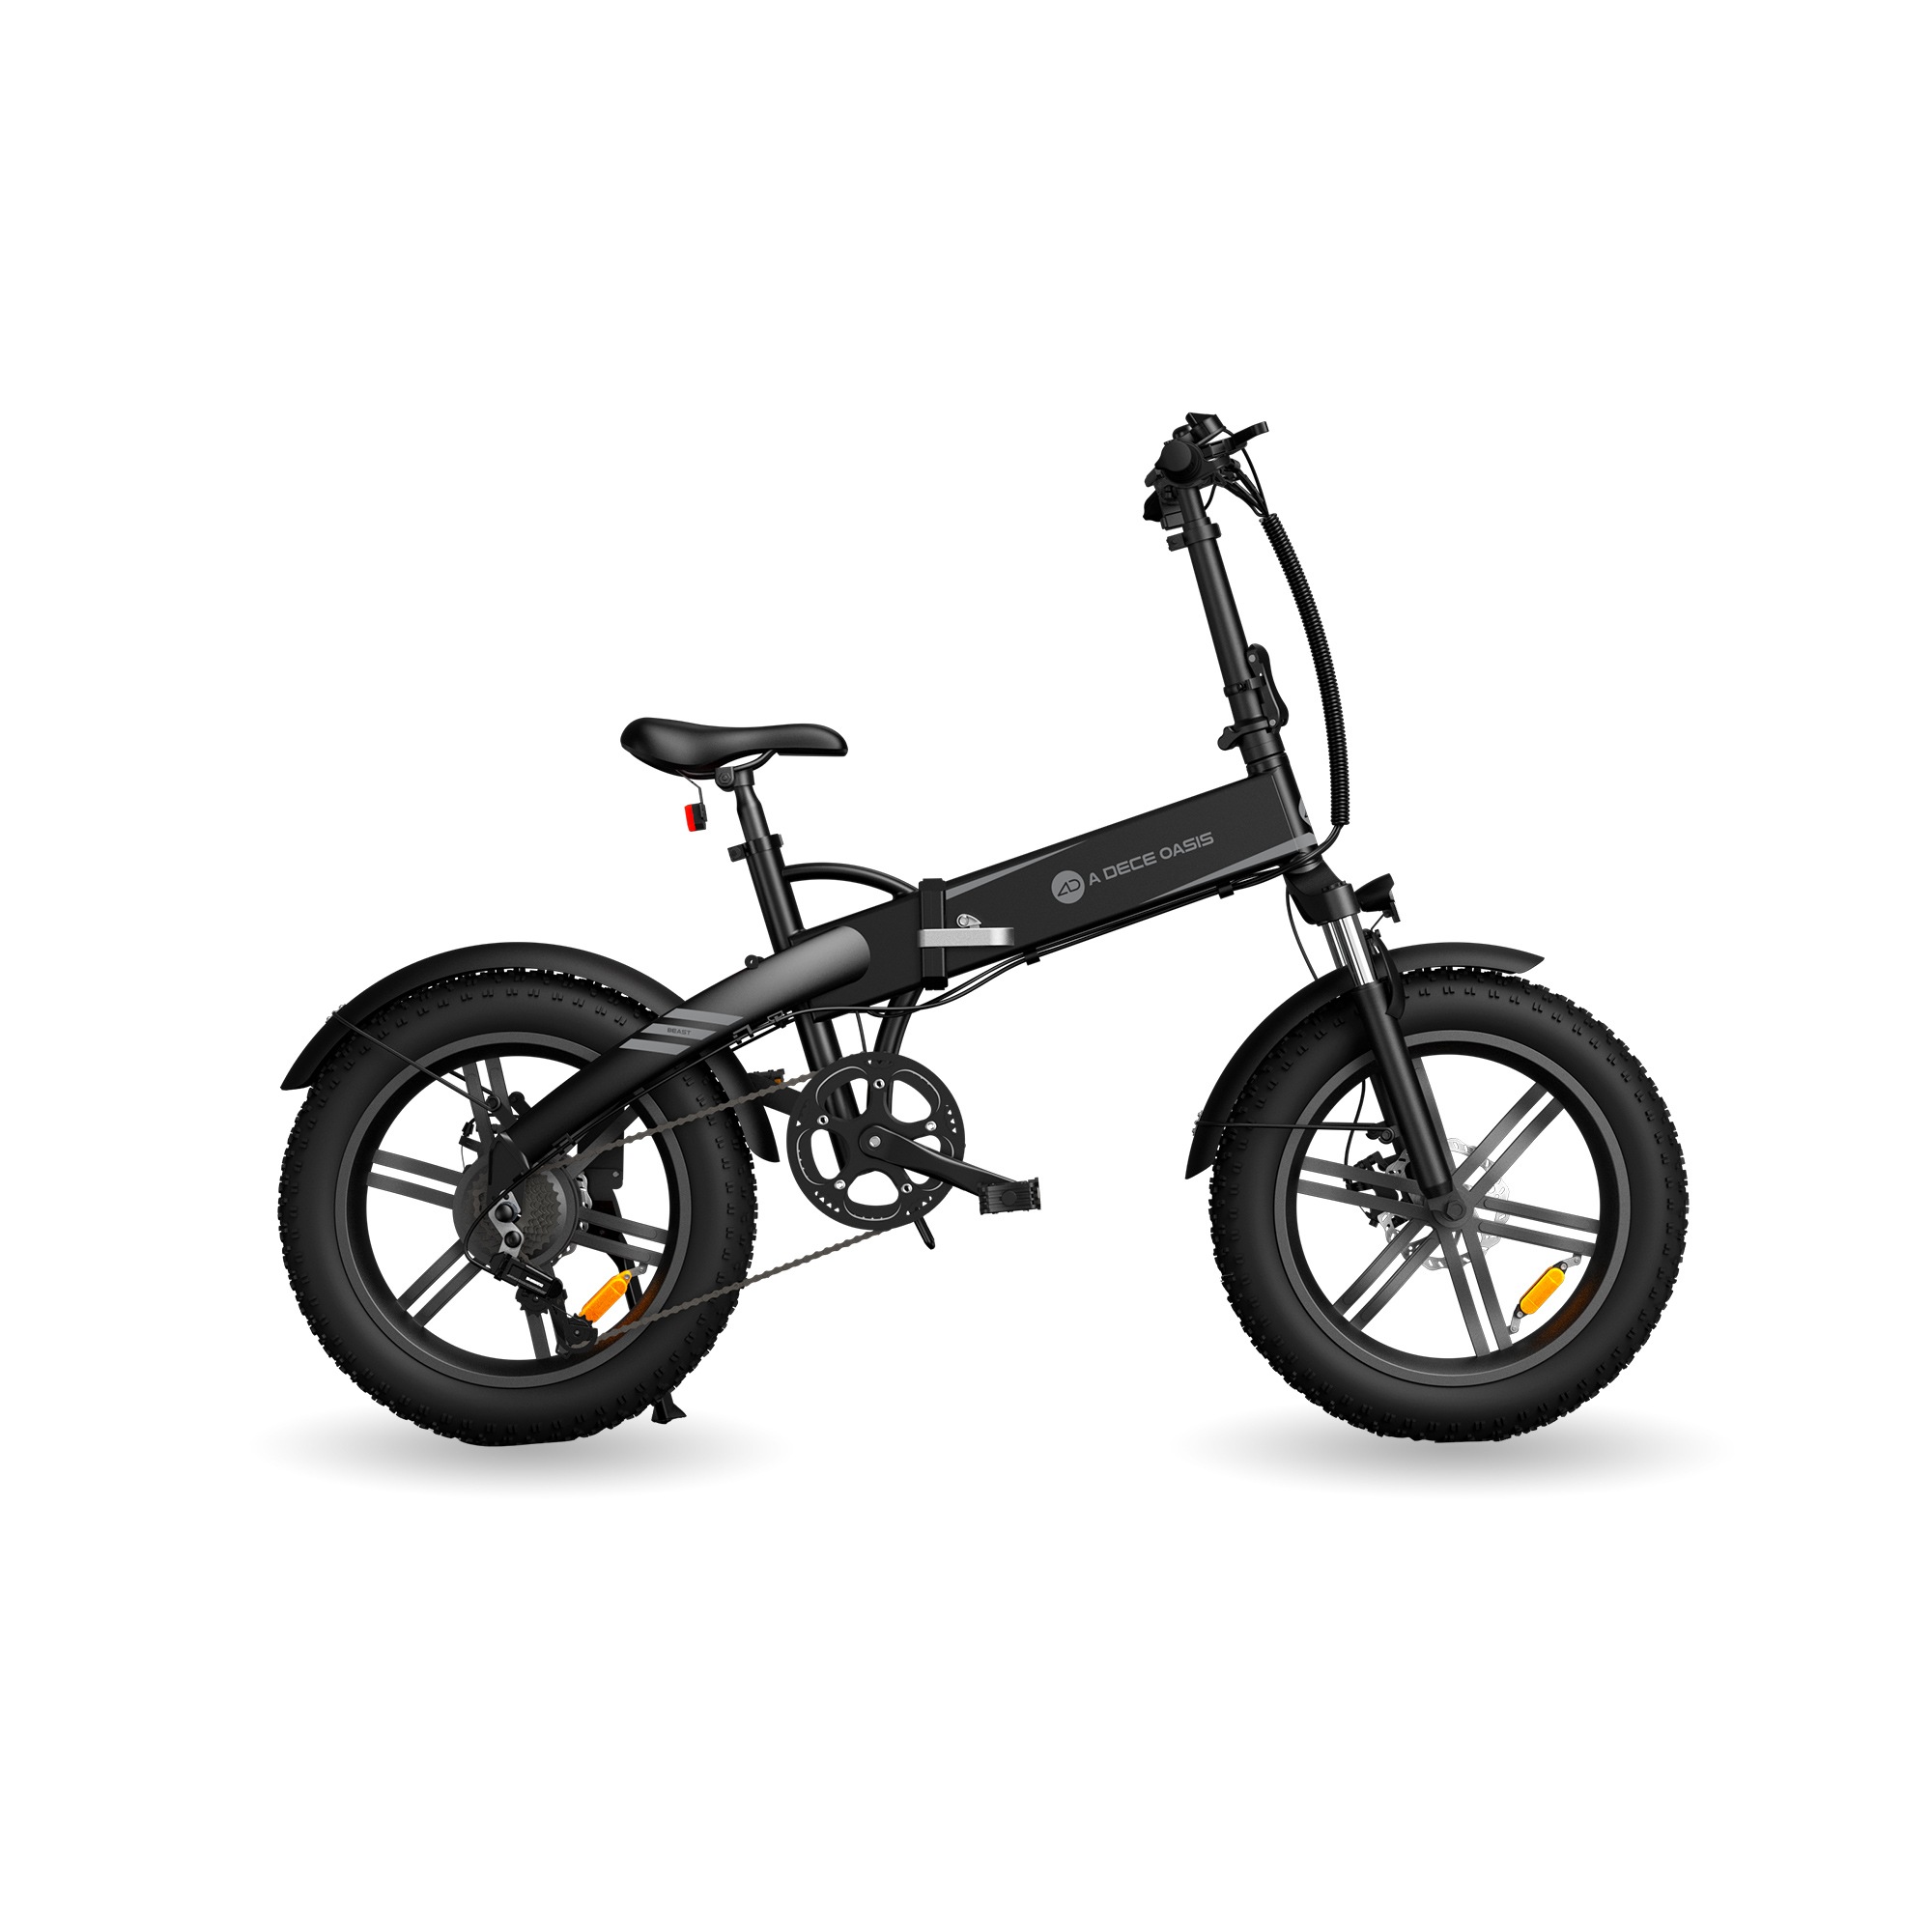 Bicicleta Eléctrica Plegable Xiaomi Ado A20f Beast, App, Aut 120km, 7  Velocidades, Frenos Hidráulicos, Pantalla Ipx7 Ips, Negro con Ofertas en  Carrefour